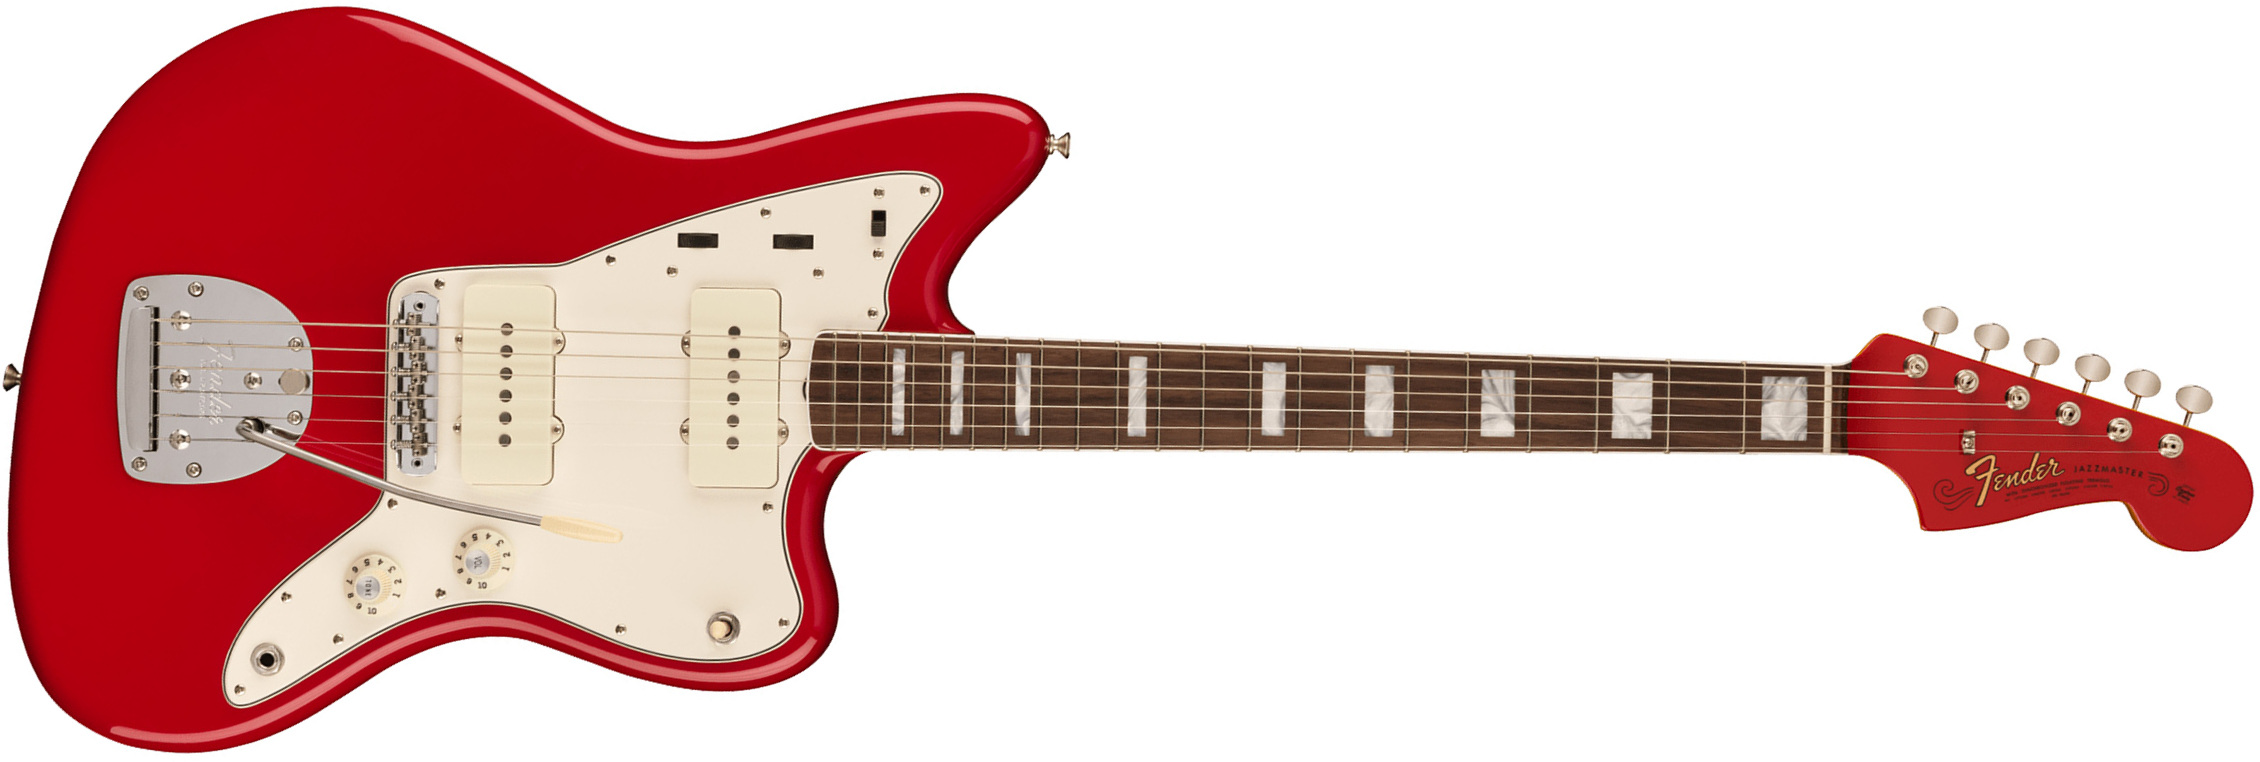 Fender Jazzmaster 1966 American Vintage Ii Usa Sh Trem Rw - Dakota Red - Retro rock electric guitar - Main picture